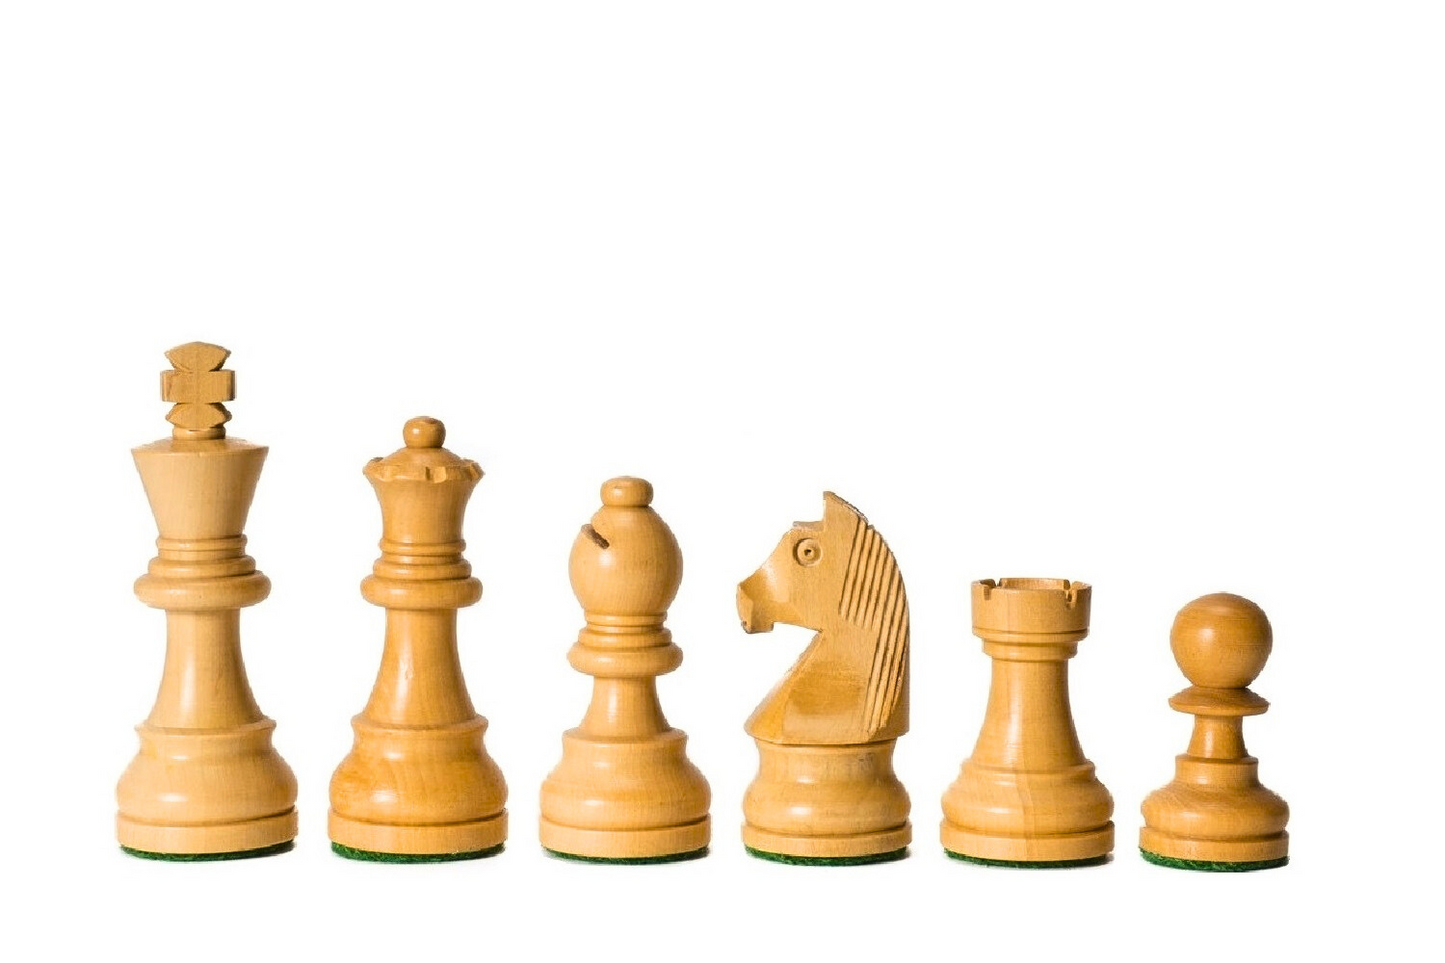 Classic Staunton Chess Pieces (3.75")